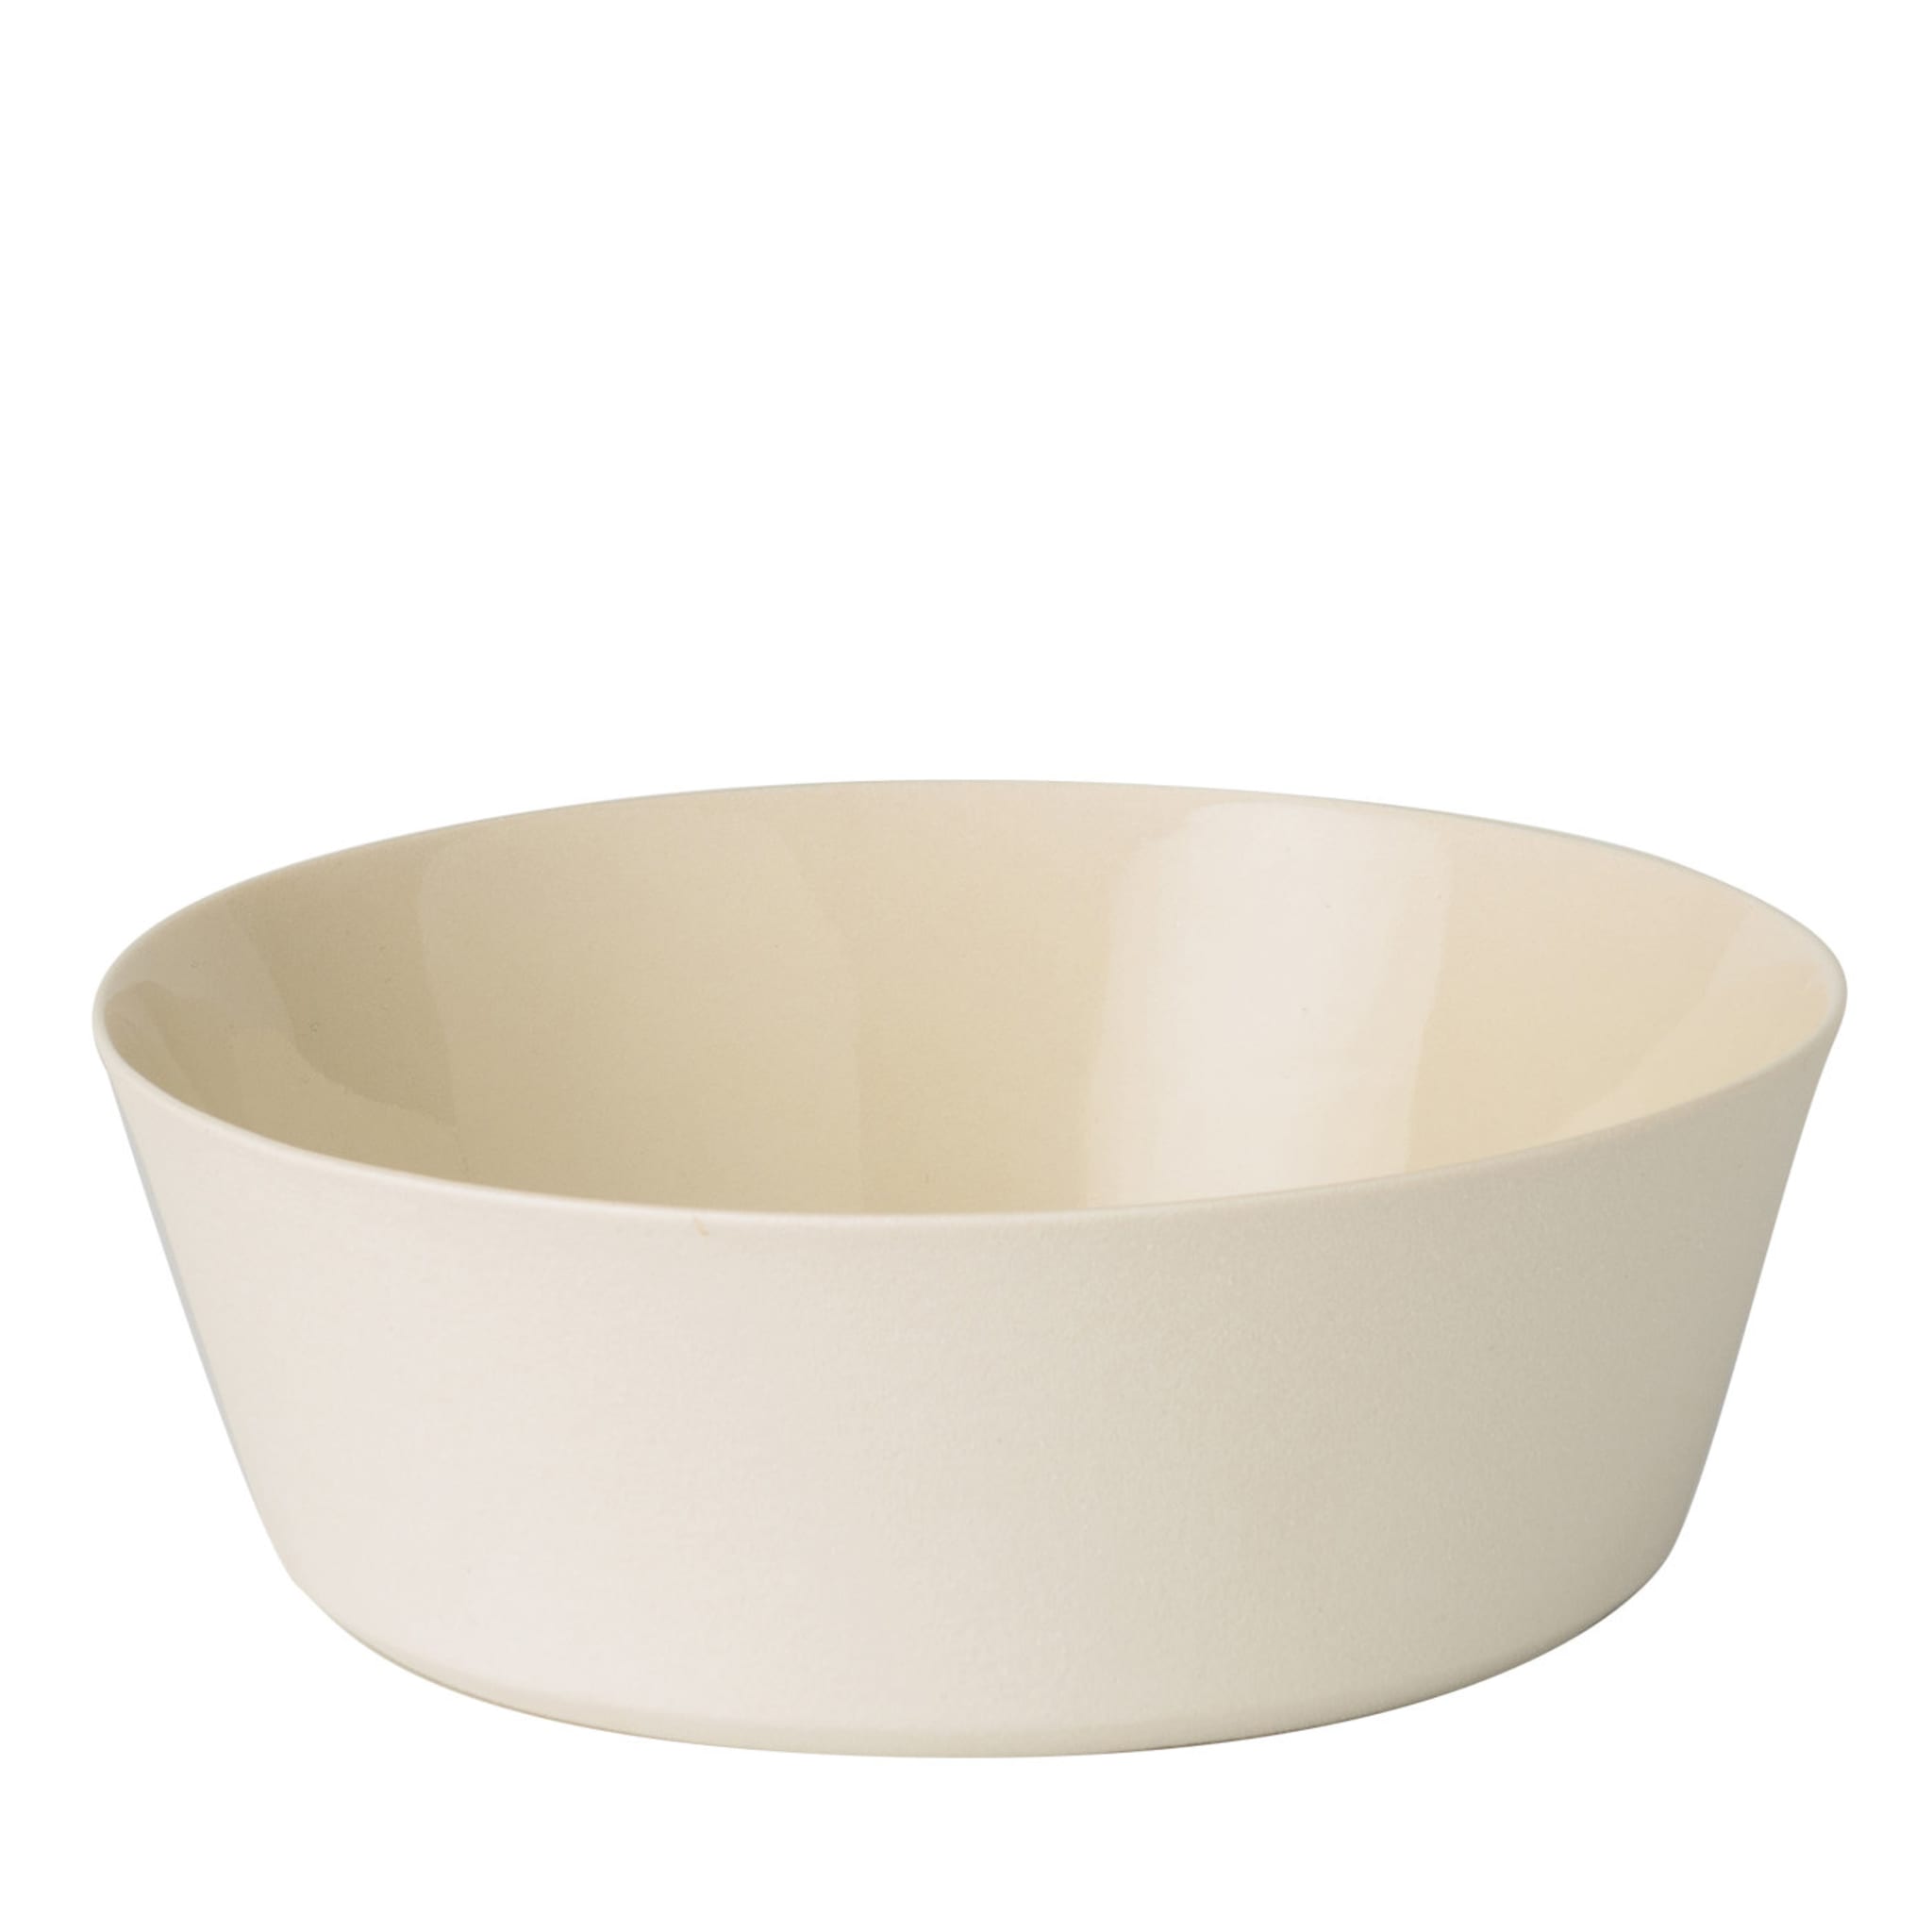 Set of 6 White Ceramic Soup Bowls - Main view